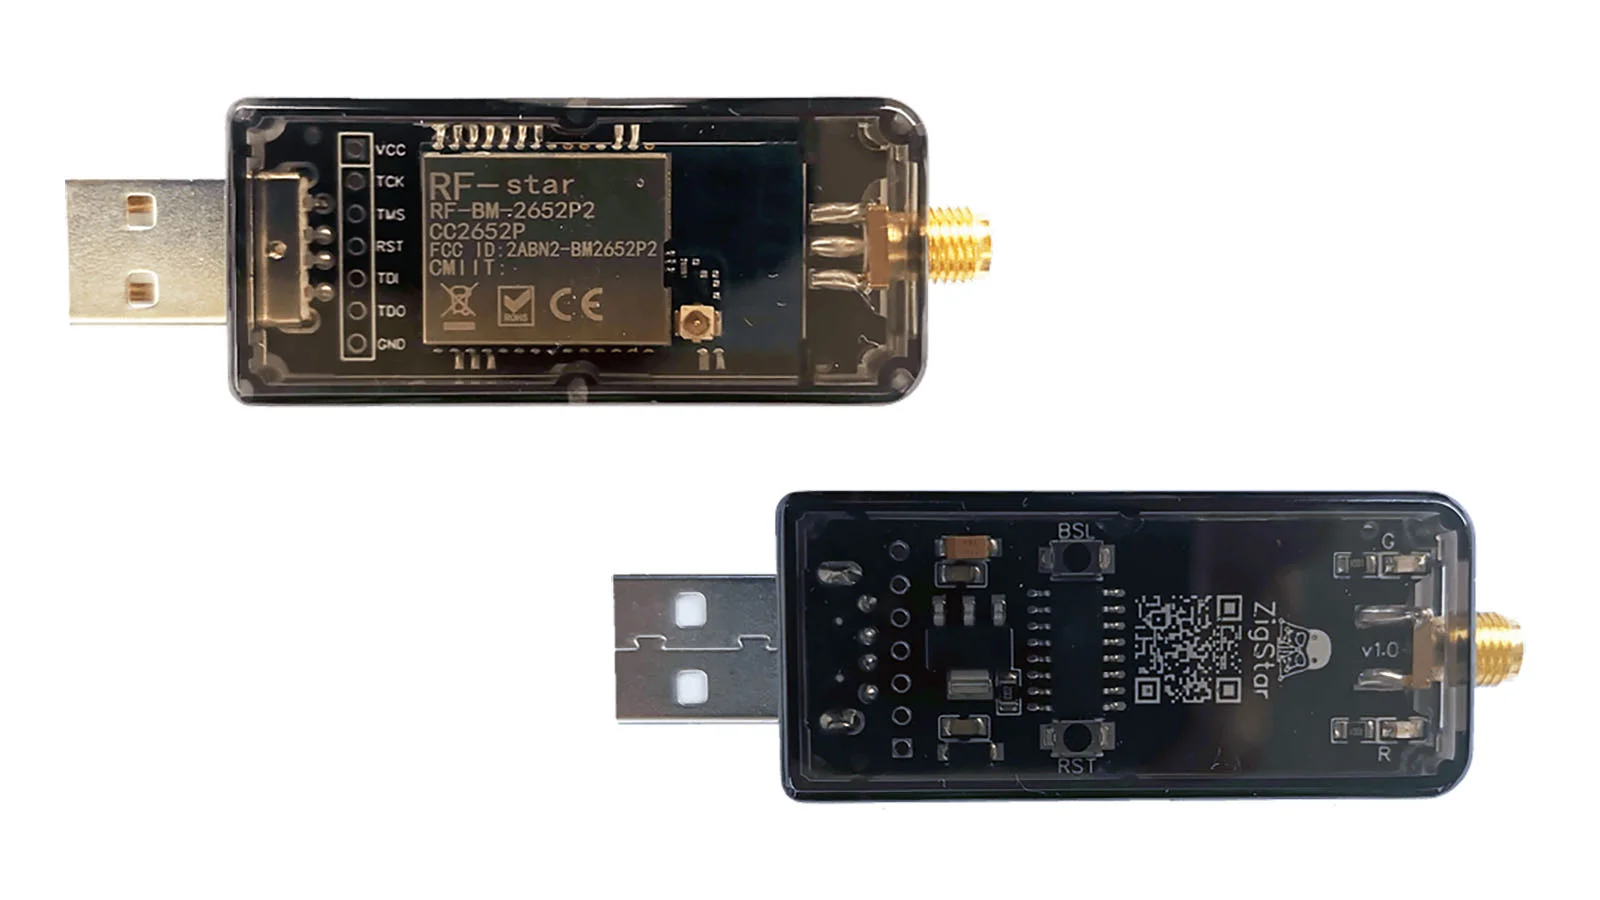 SONOFF Zigbee 3.0 USB Dongle Plus - Hardware - Home Assistant